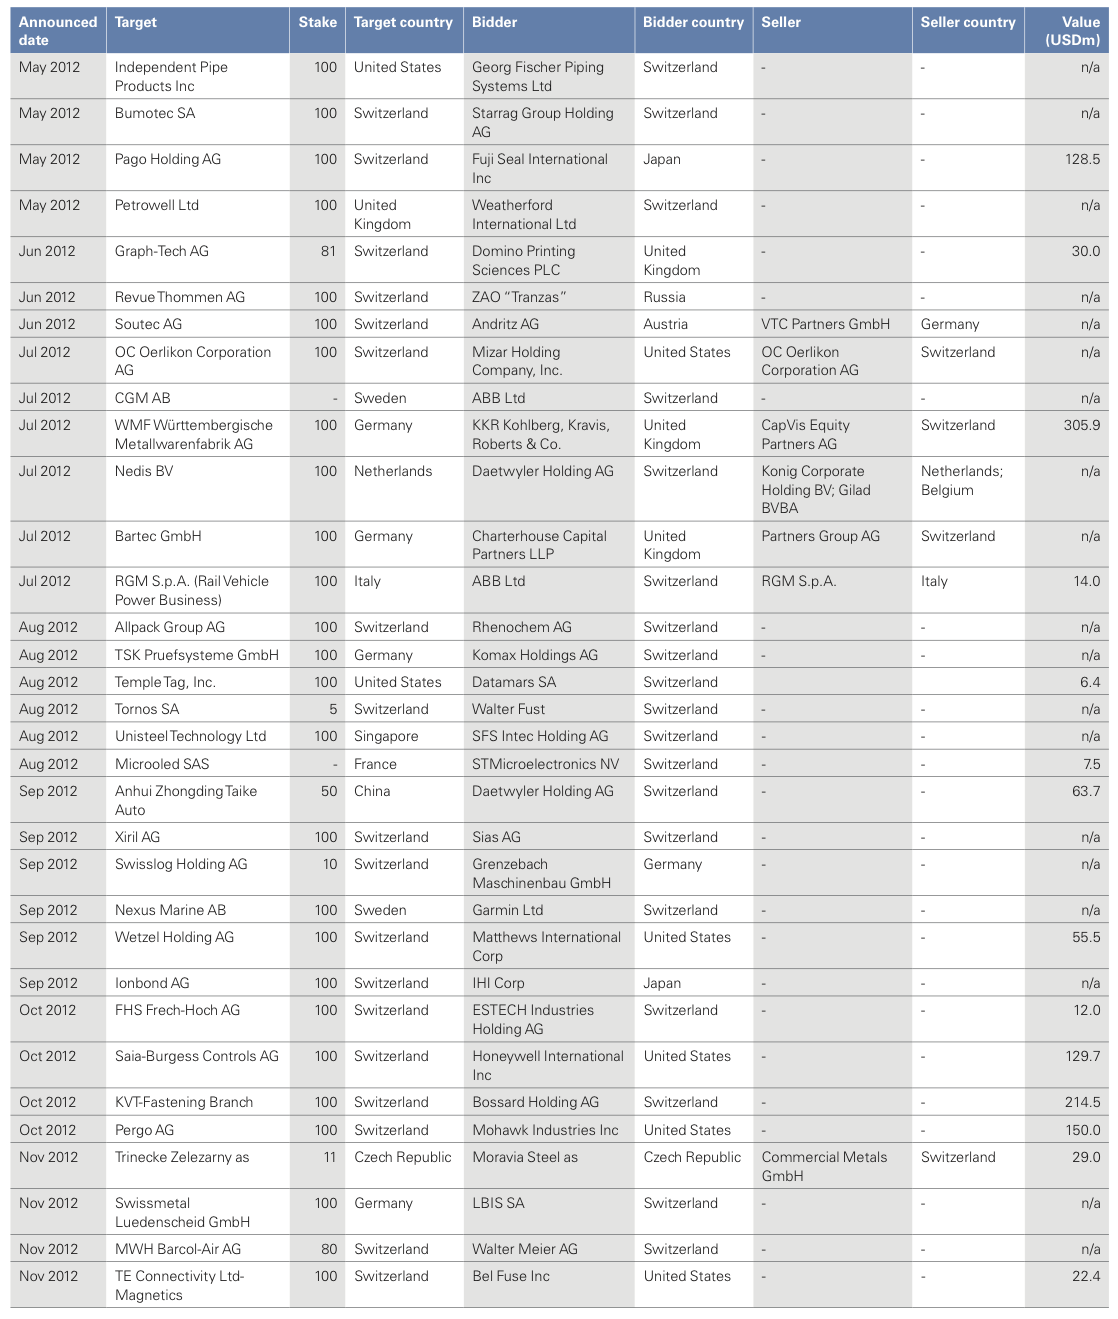 Figure 24: List of 2012 Swiss M&A Transactions